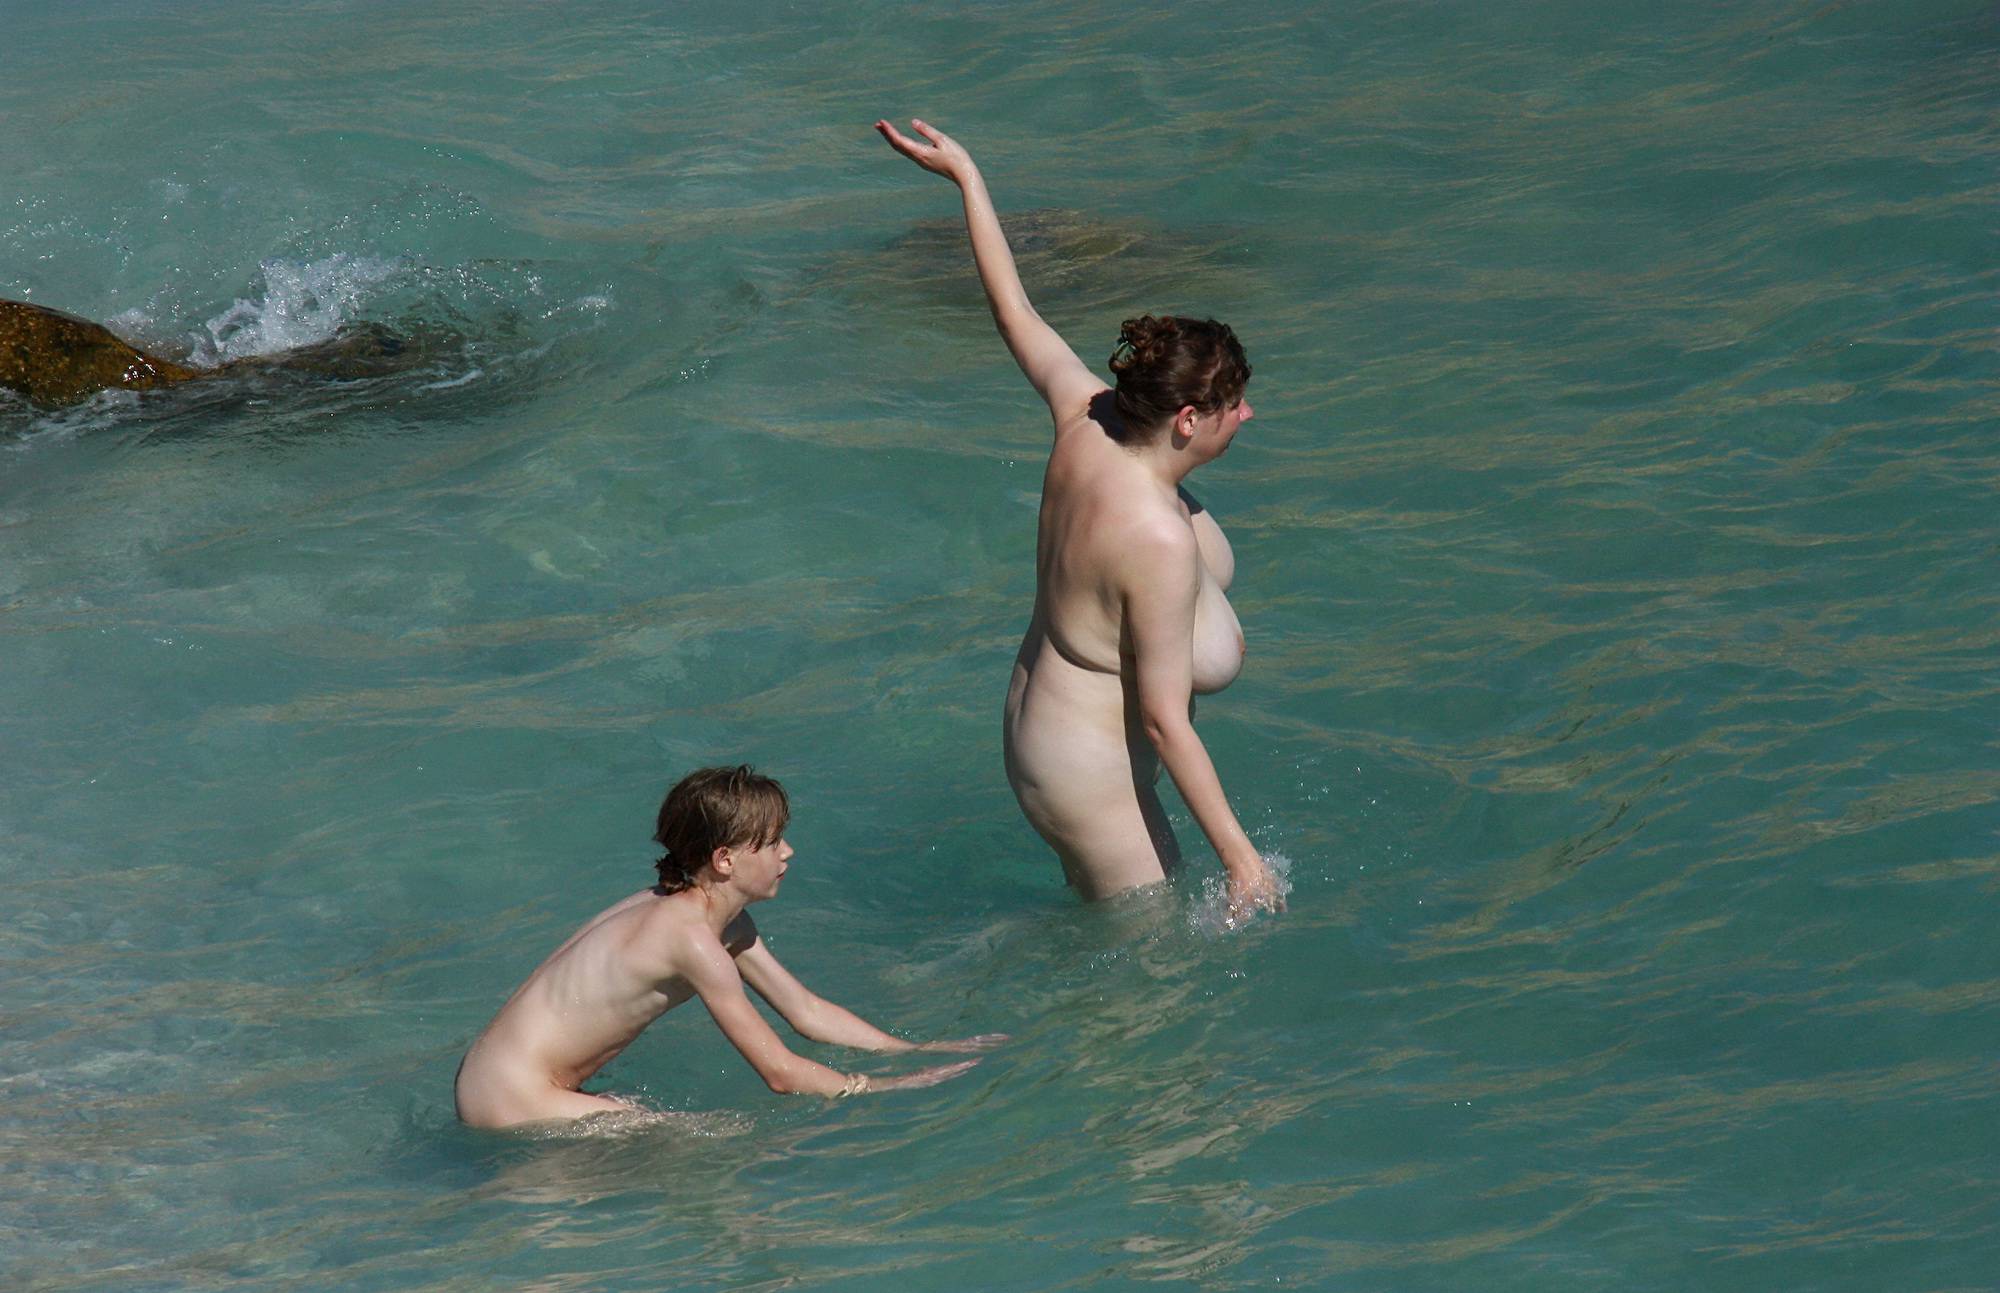 Nudist Pics Wading Through The Sea - 2